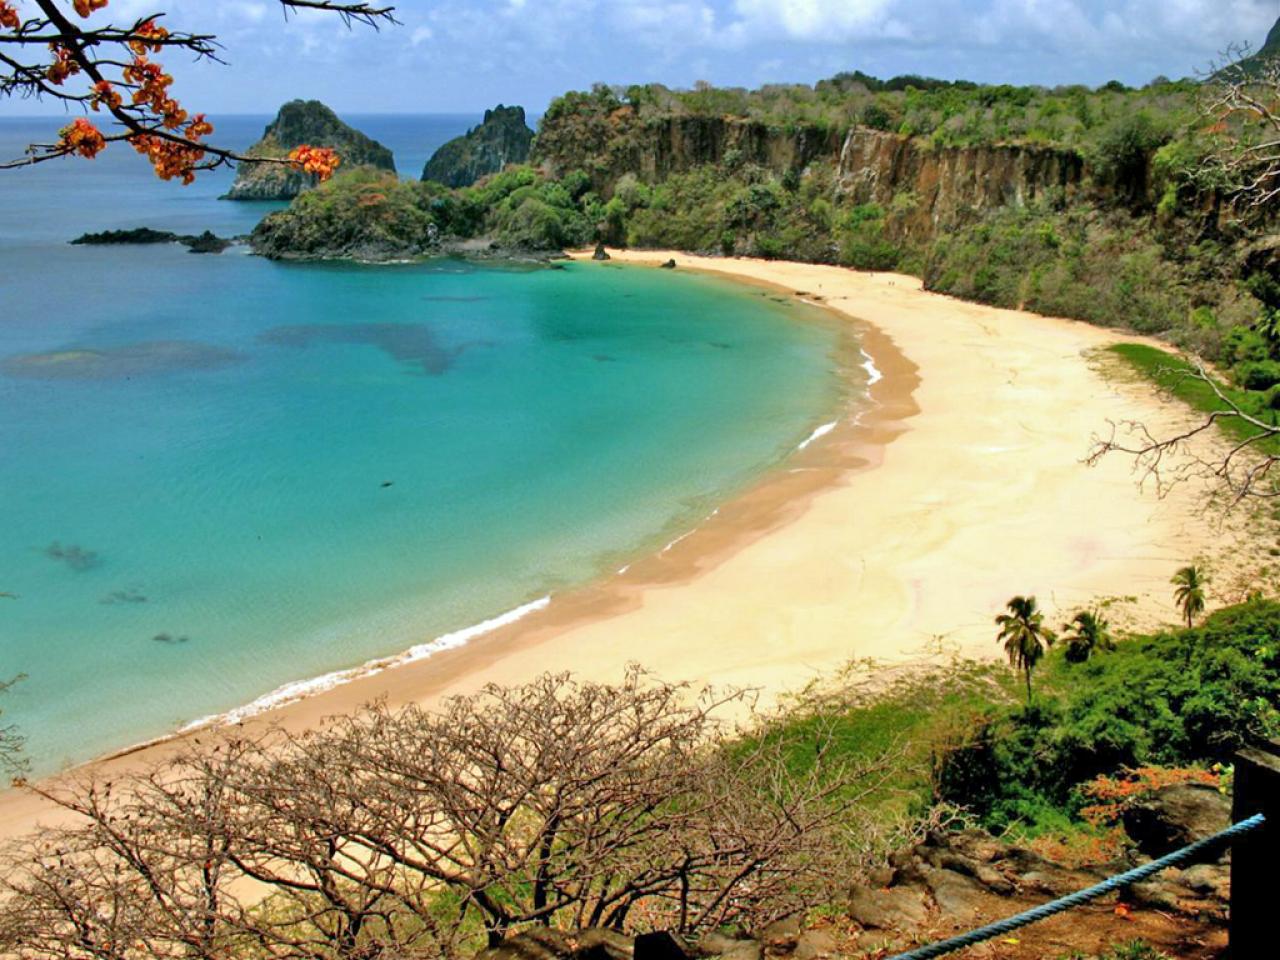 Brazils Best Beaches Brazil TravelChannel Brazil Vacation Destinations Travel Channel Travel Channel image